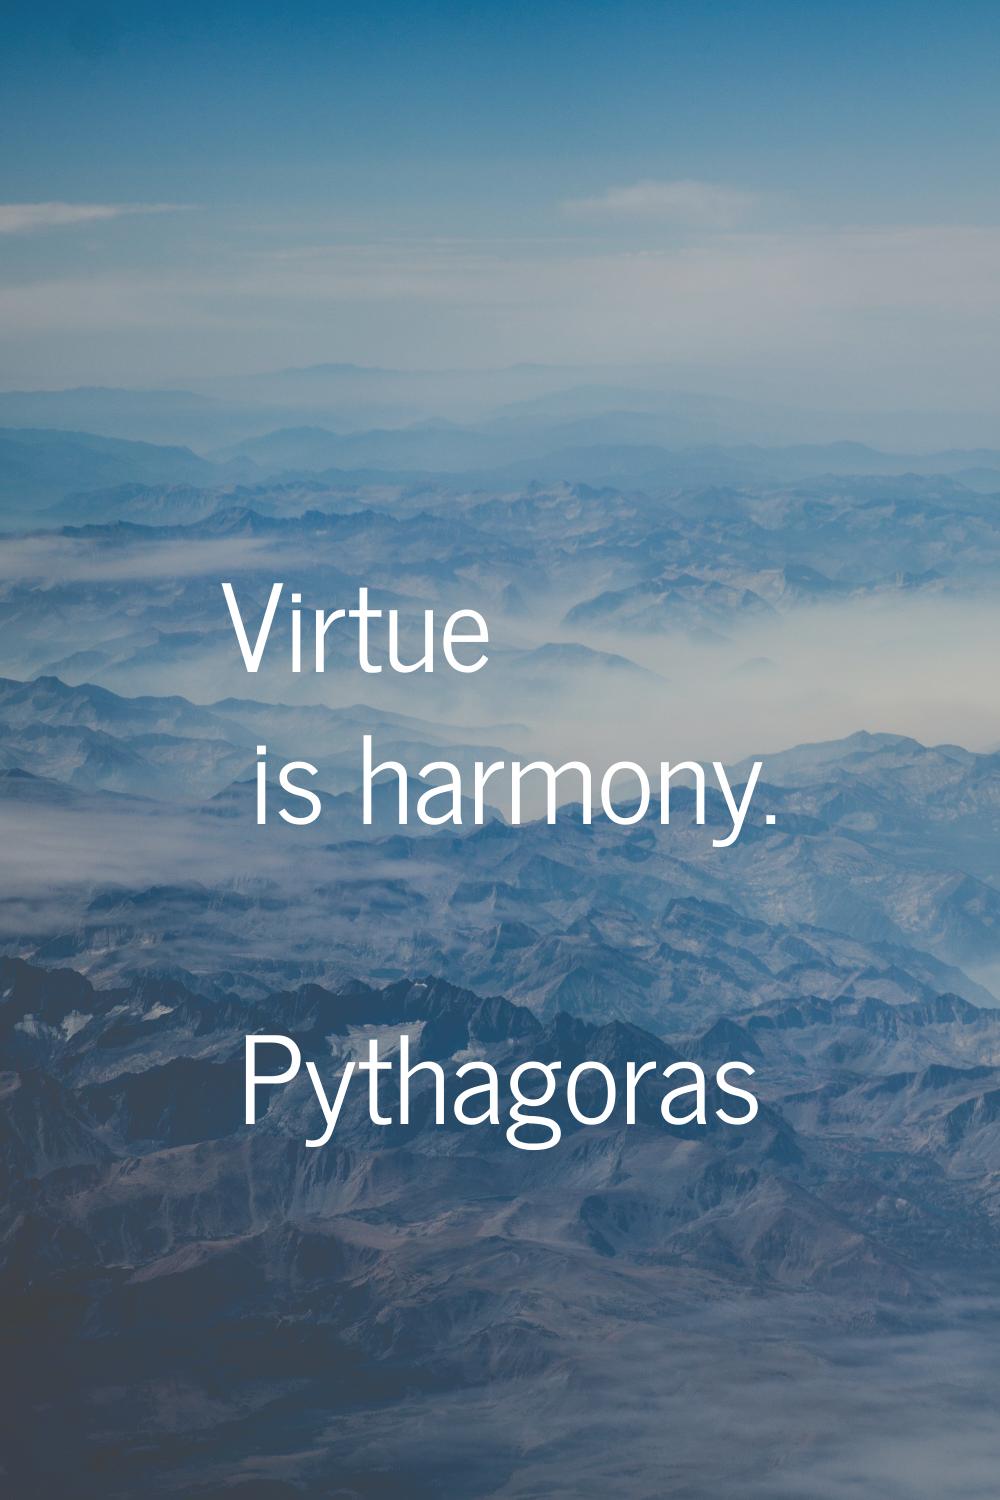 Virtue is harmony.